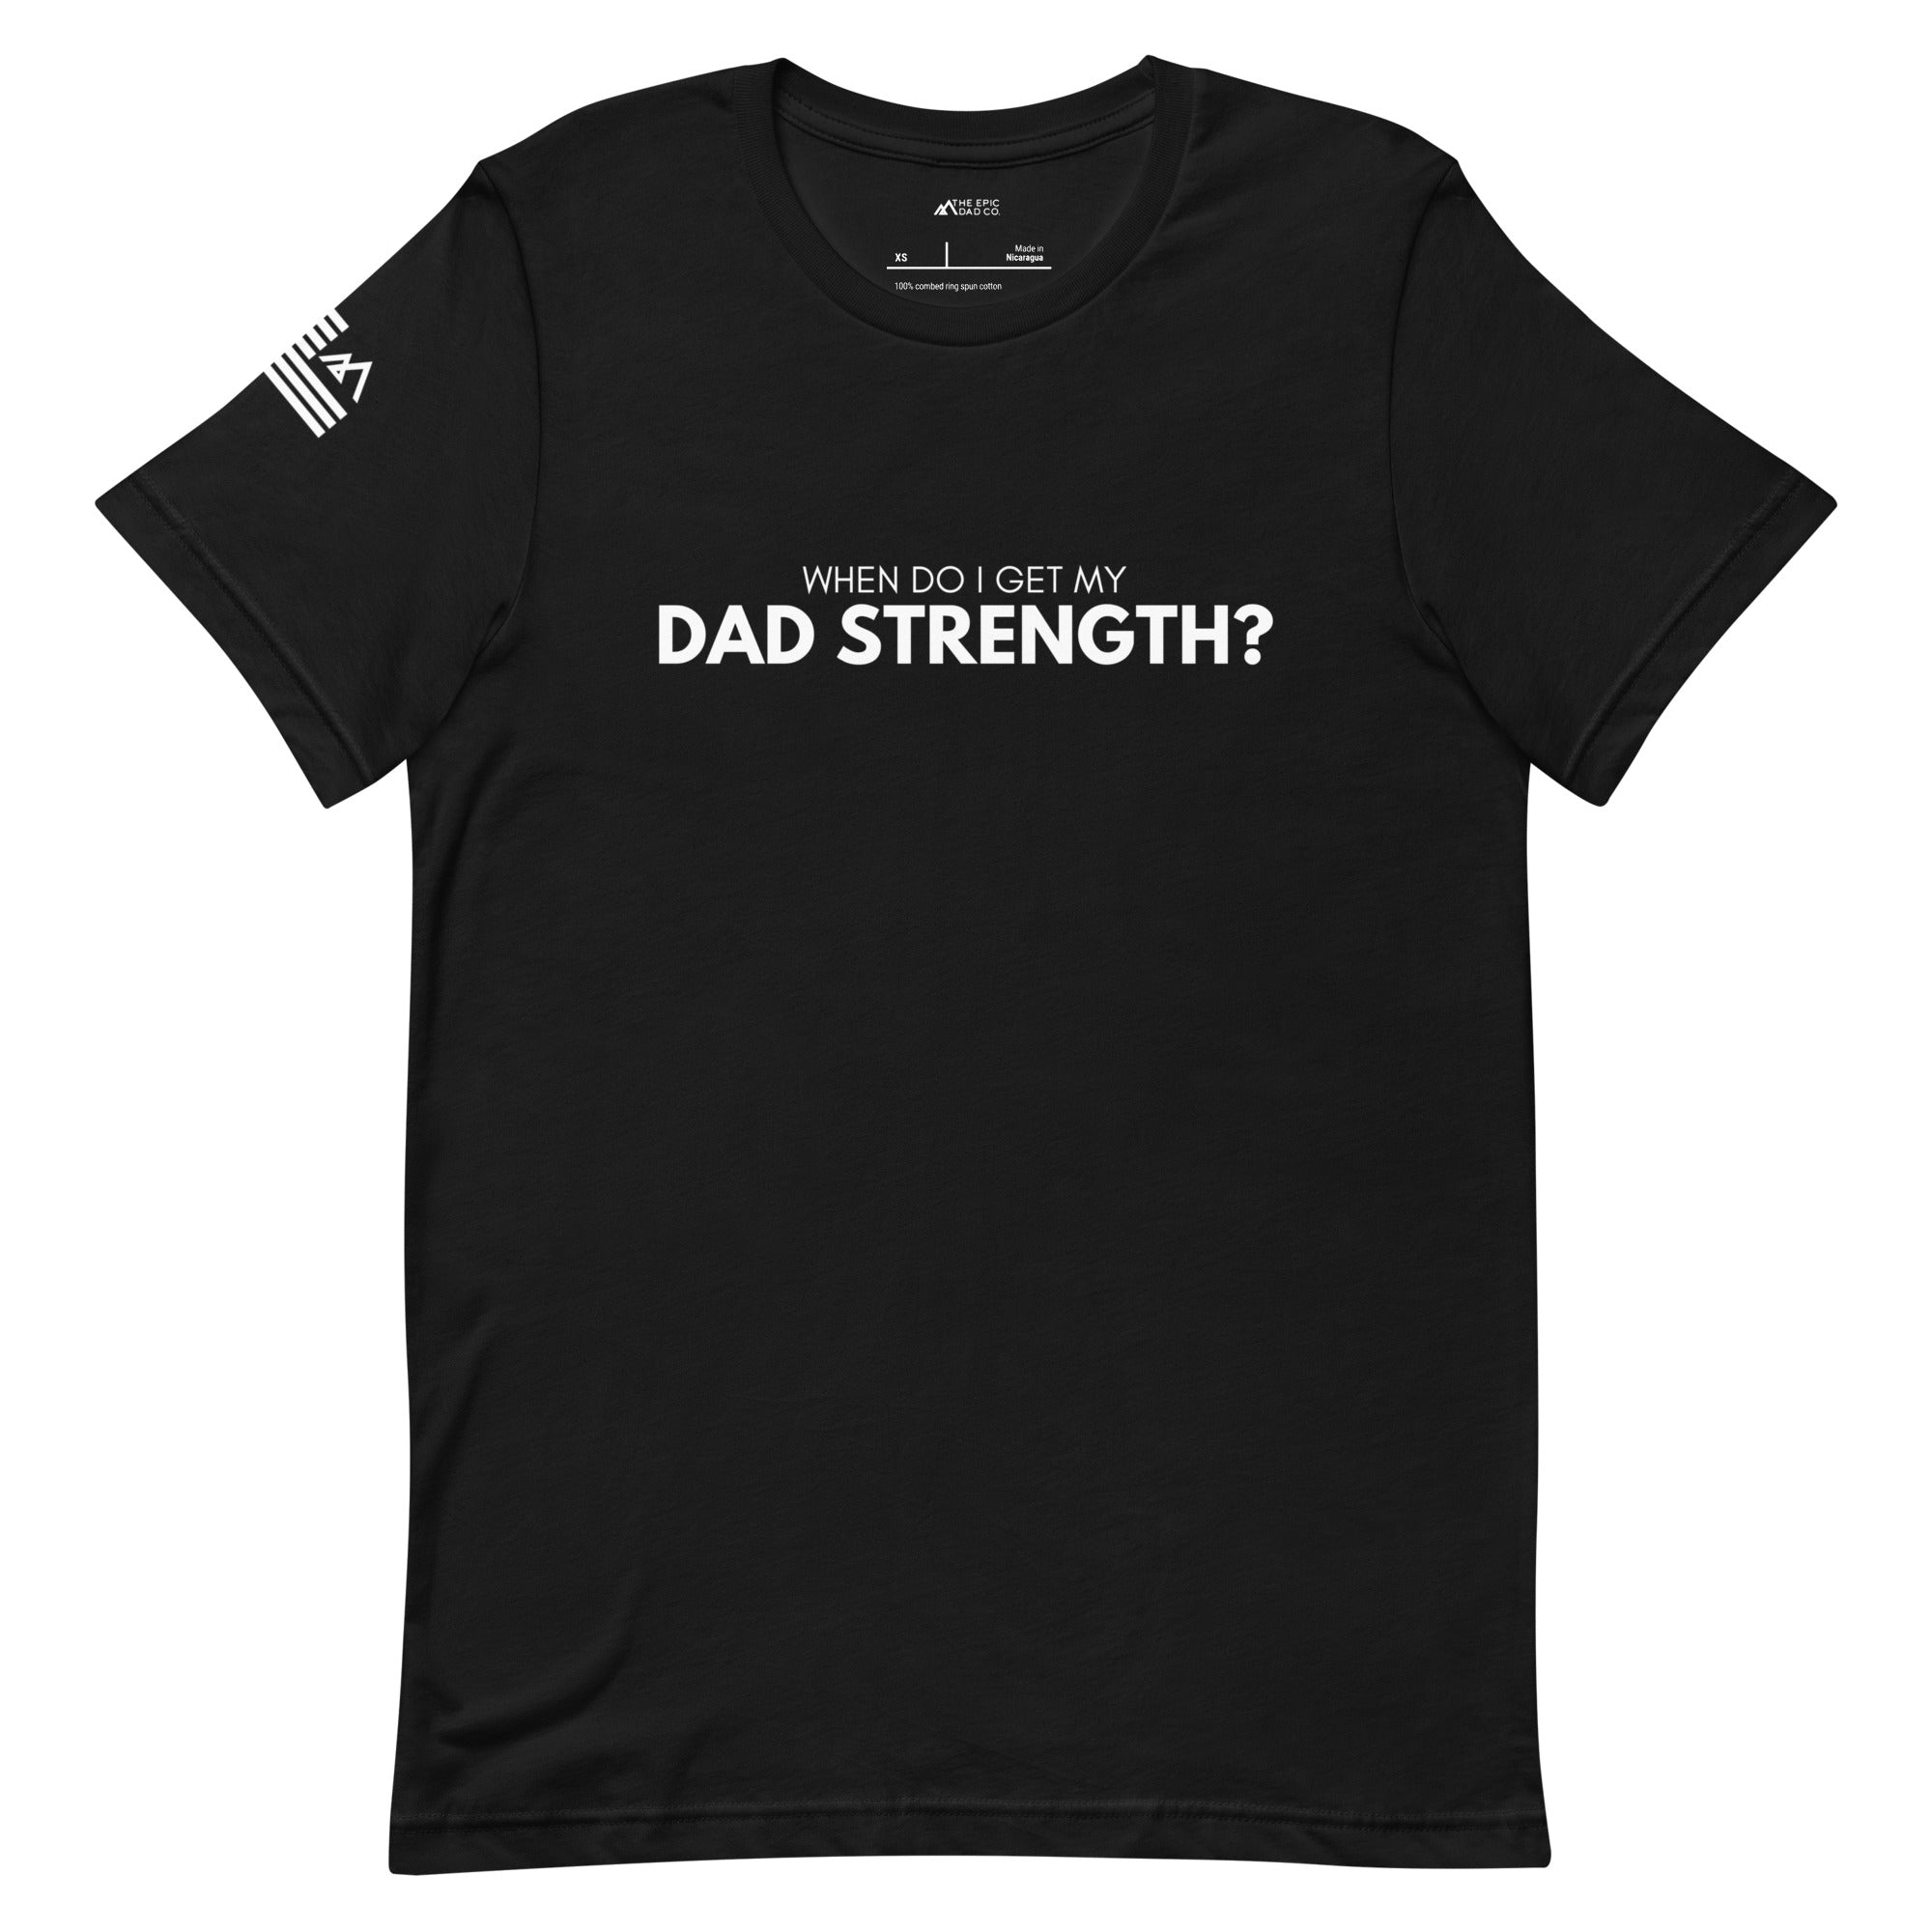 Dad Strength (Black)